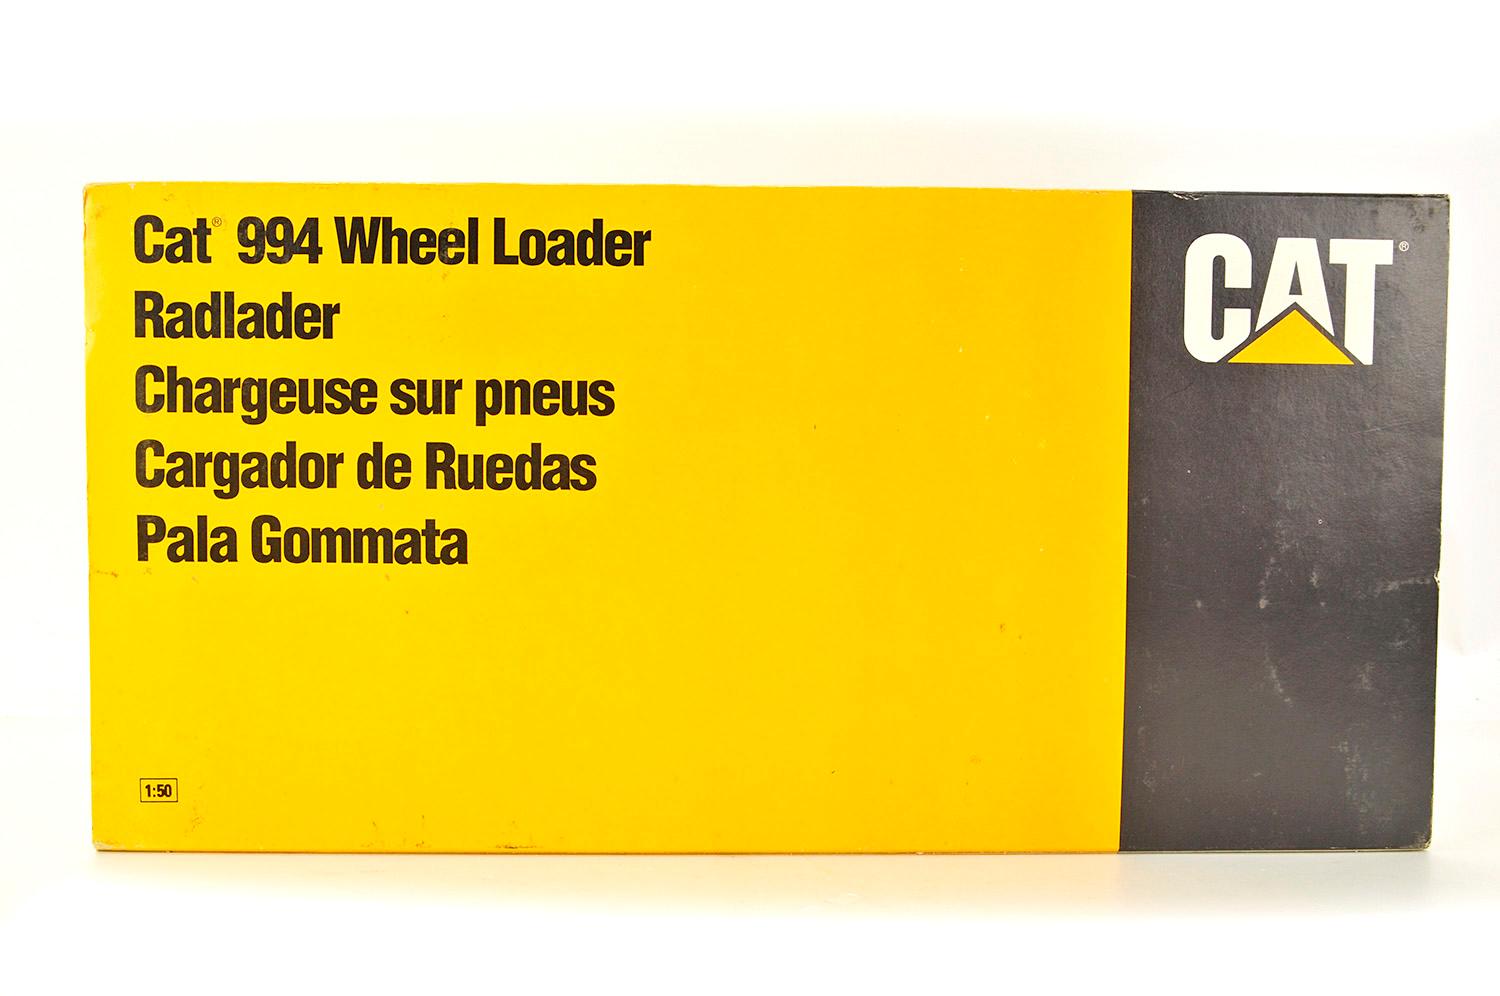 Caterpillar 994 Wheel Loader